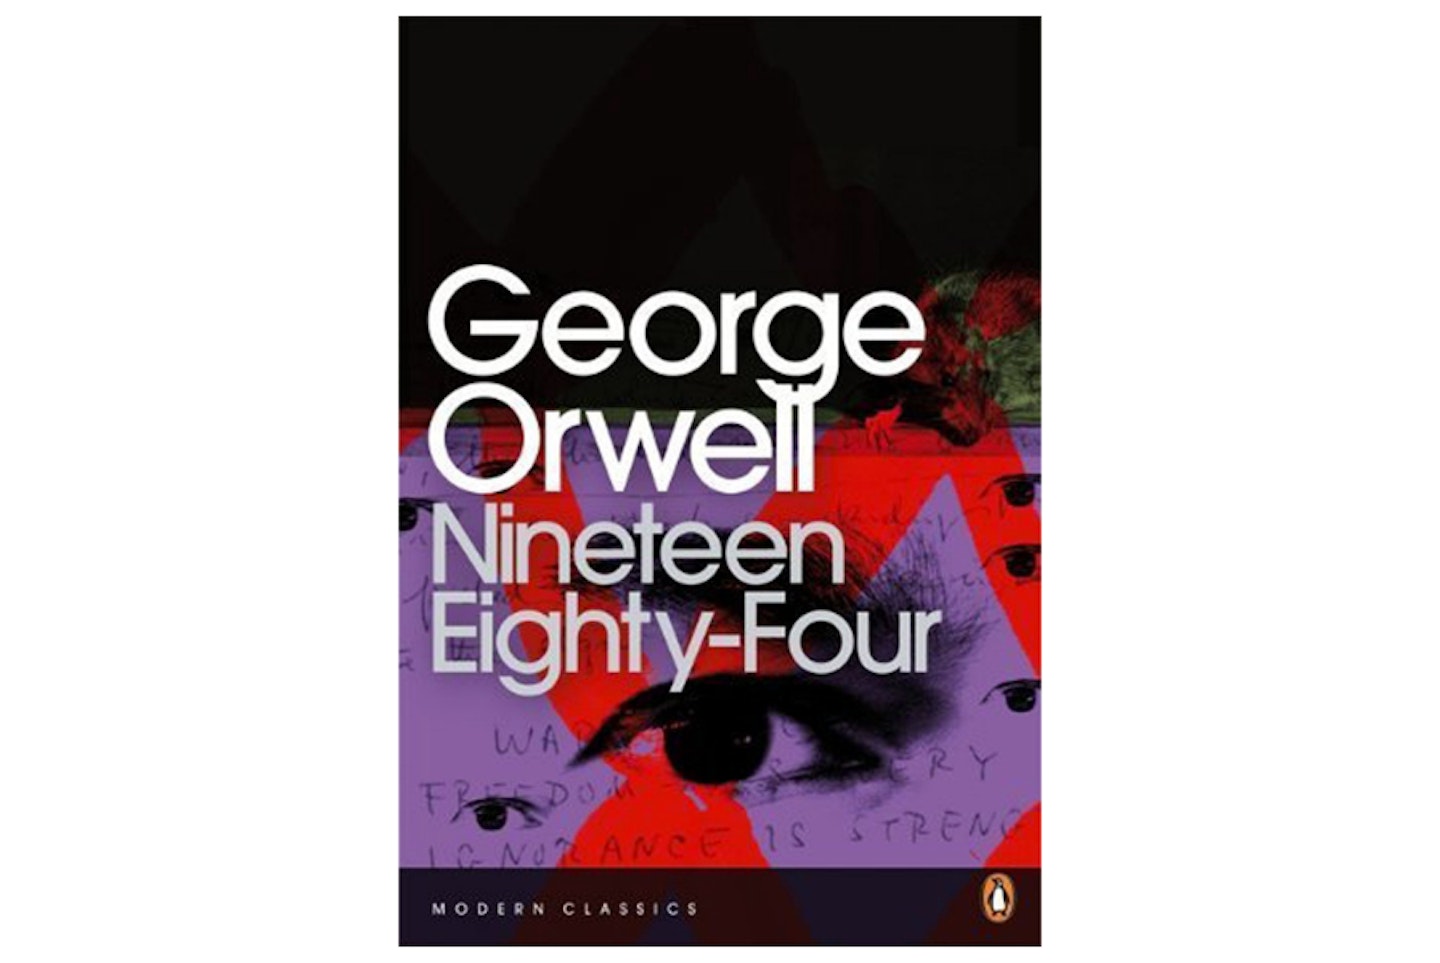 1984 by George Orwell, £6.37